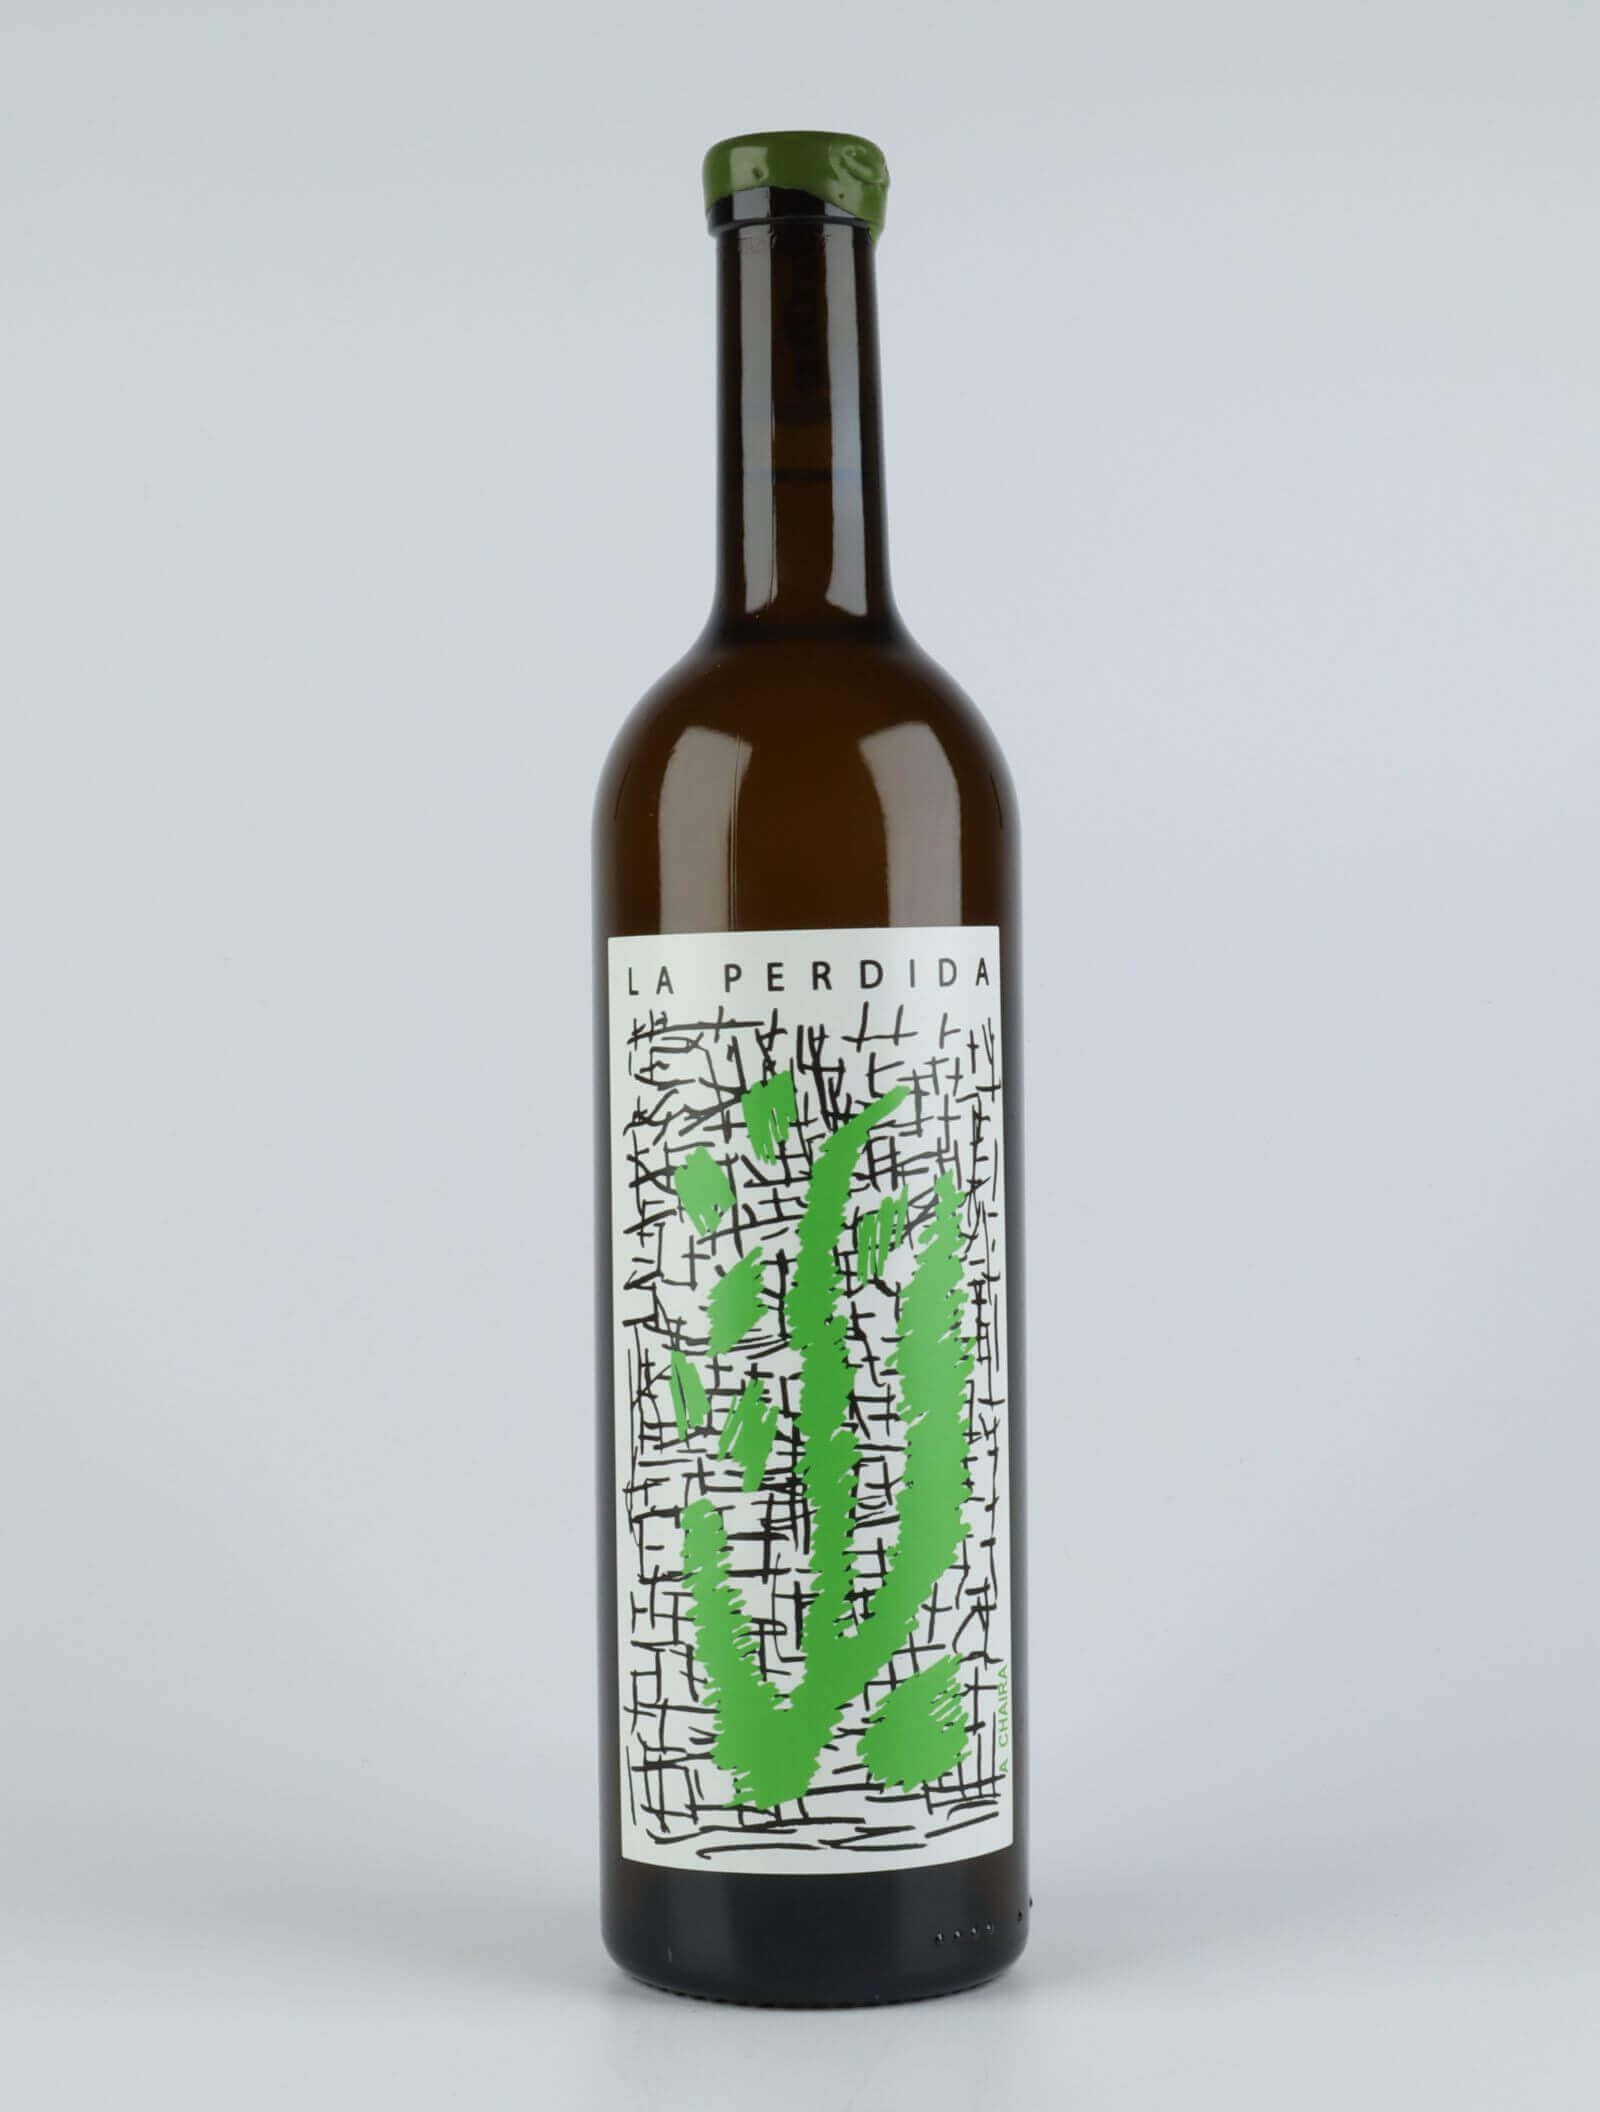 A bottle 2019 A Chaira White wine from La Perdida, Ribeira Sacra in Spain